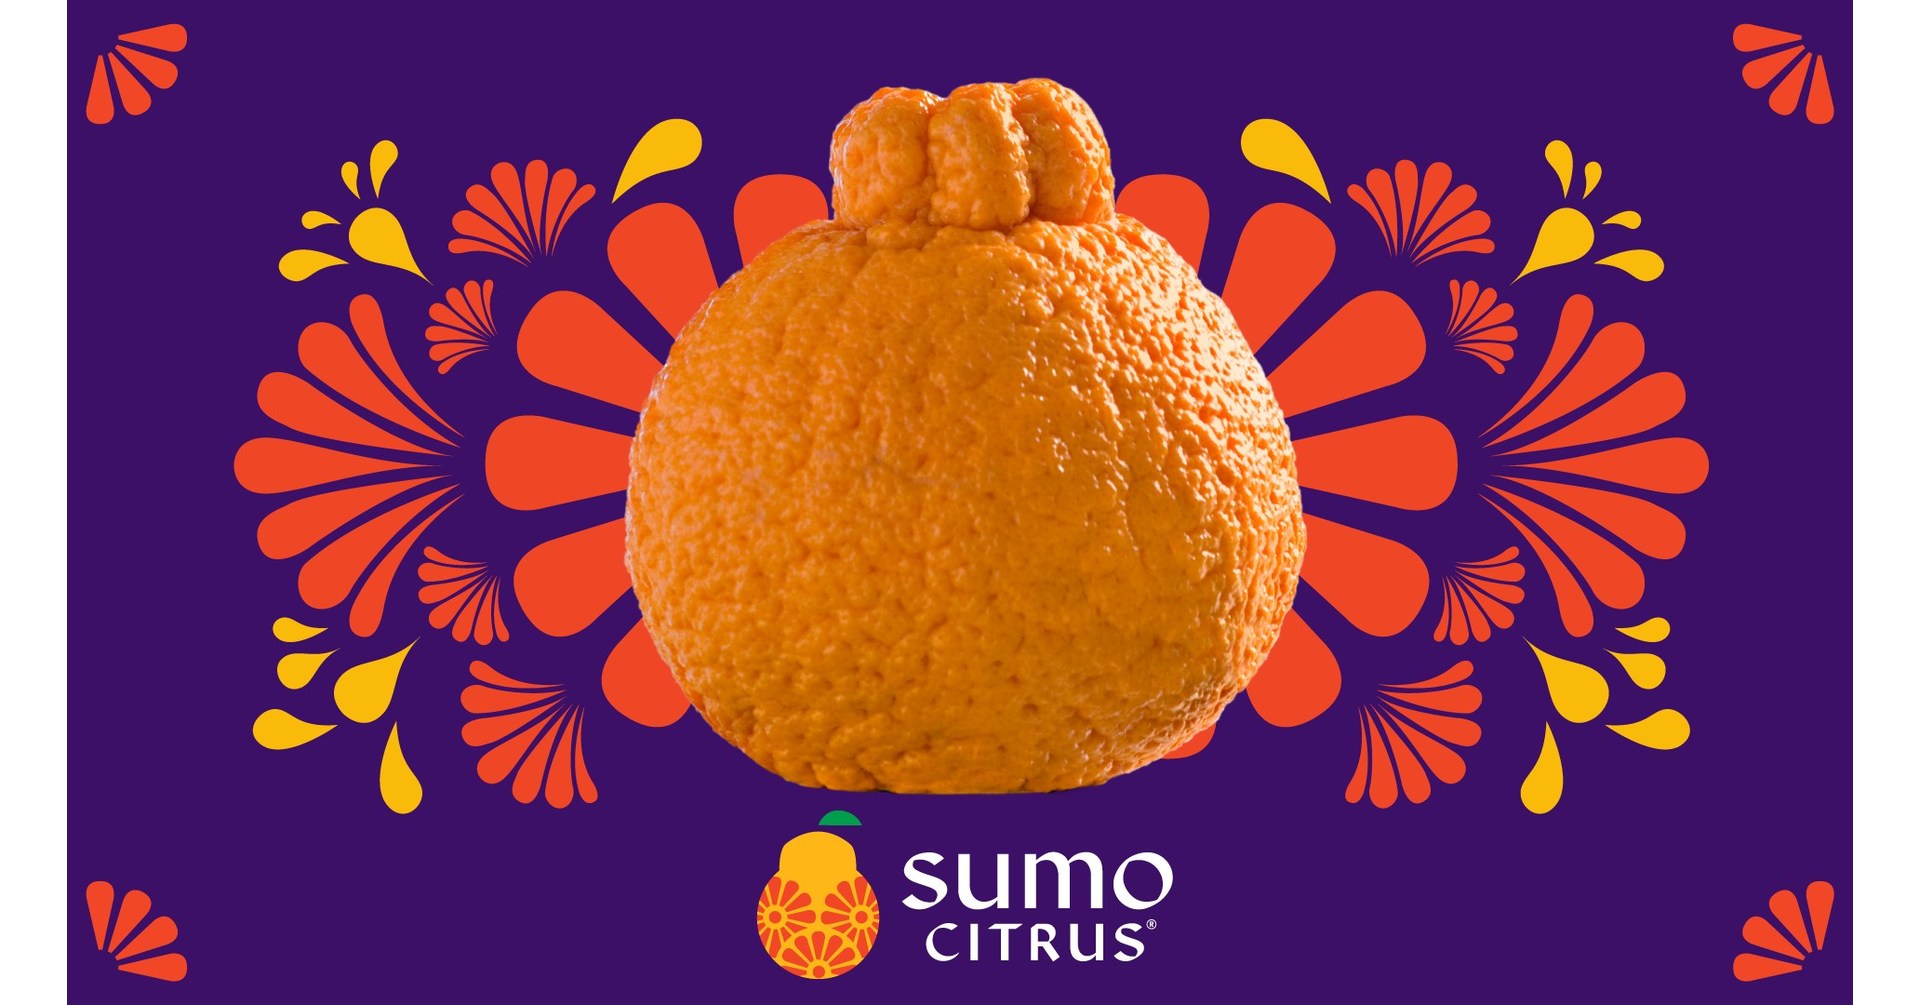 https://mma.prnewswire.com/media/1041785/2020_Sumo_Citrus_Season.jpg?p=facebook